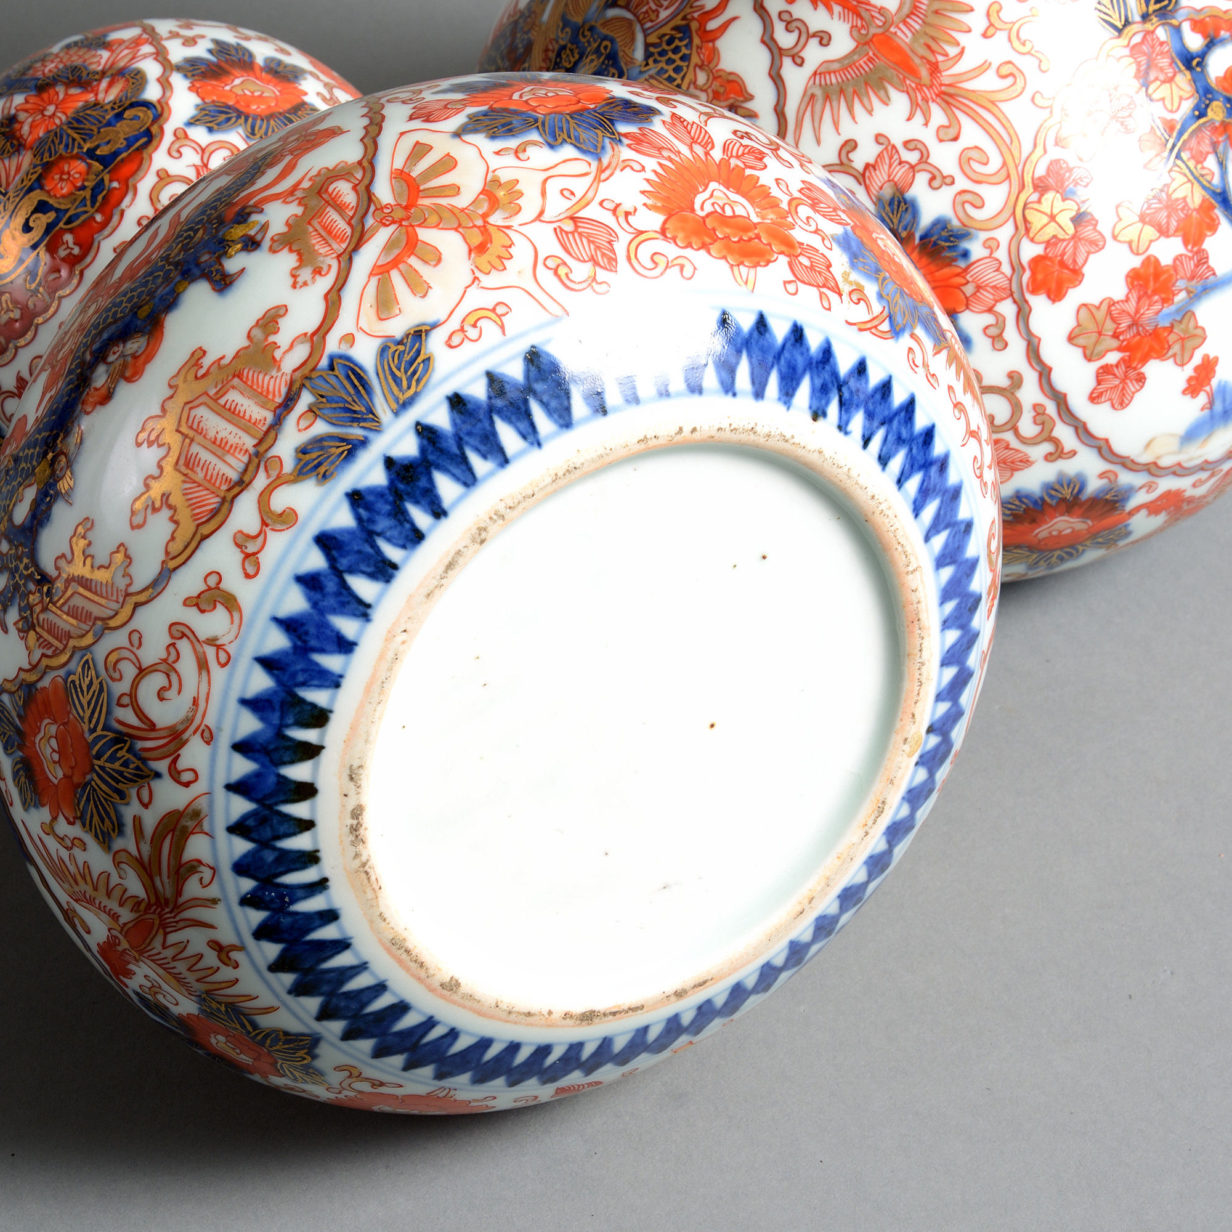 A pair of 19th century imari porcelain double gourd form vases